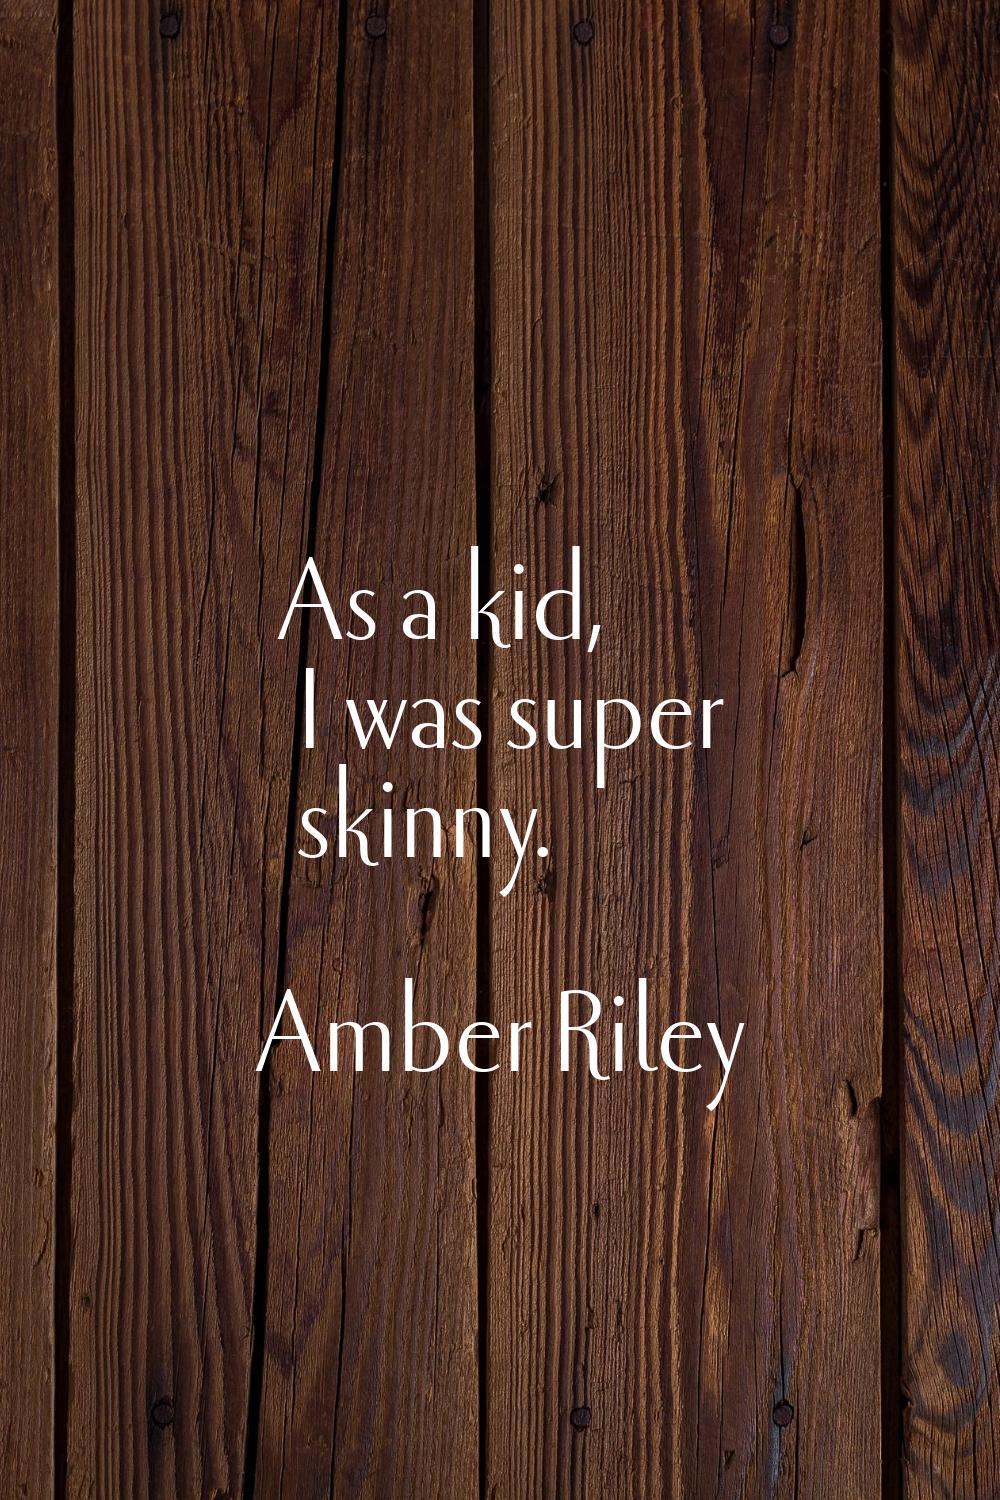 As a kid, I was super skinny.